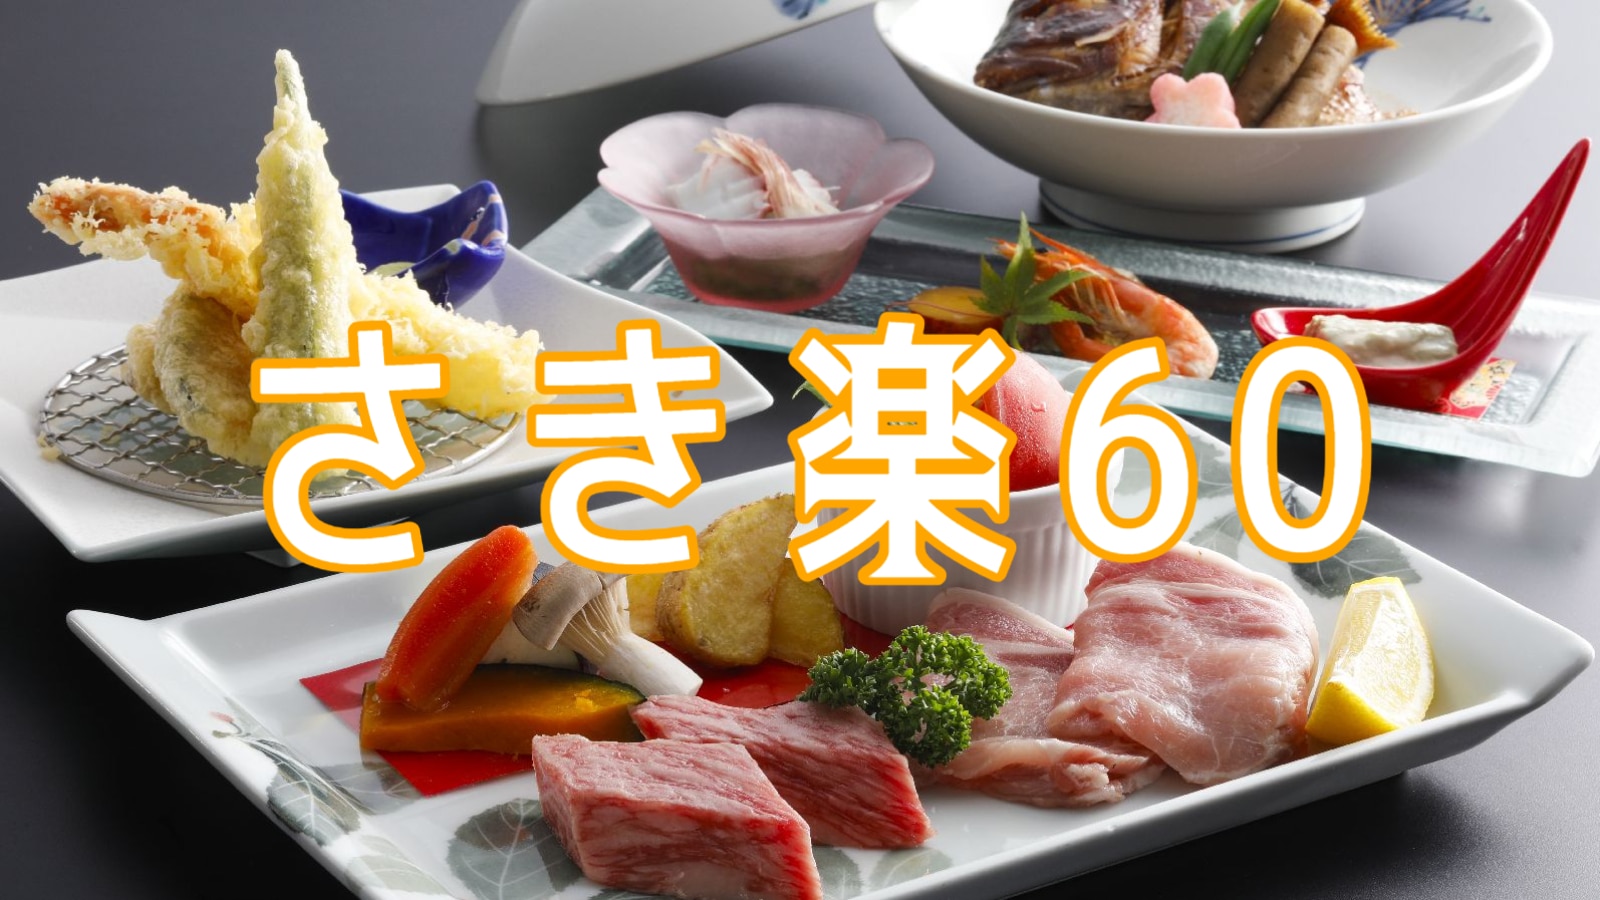 ★ Saki Raku 60! Iyo Beef & Hime Pork Double Steak ♪ There is also a half-buffet menu ♪ ※ Image